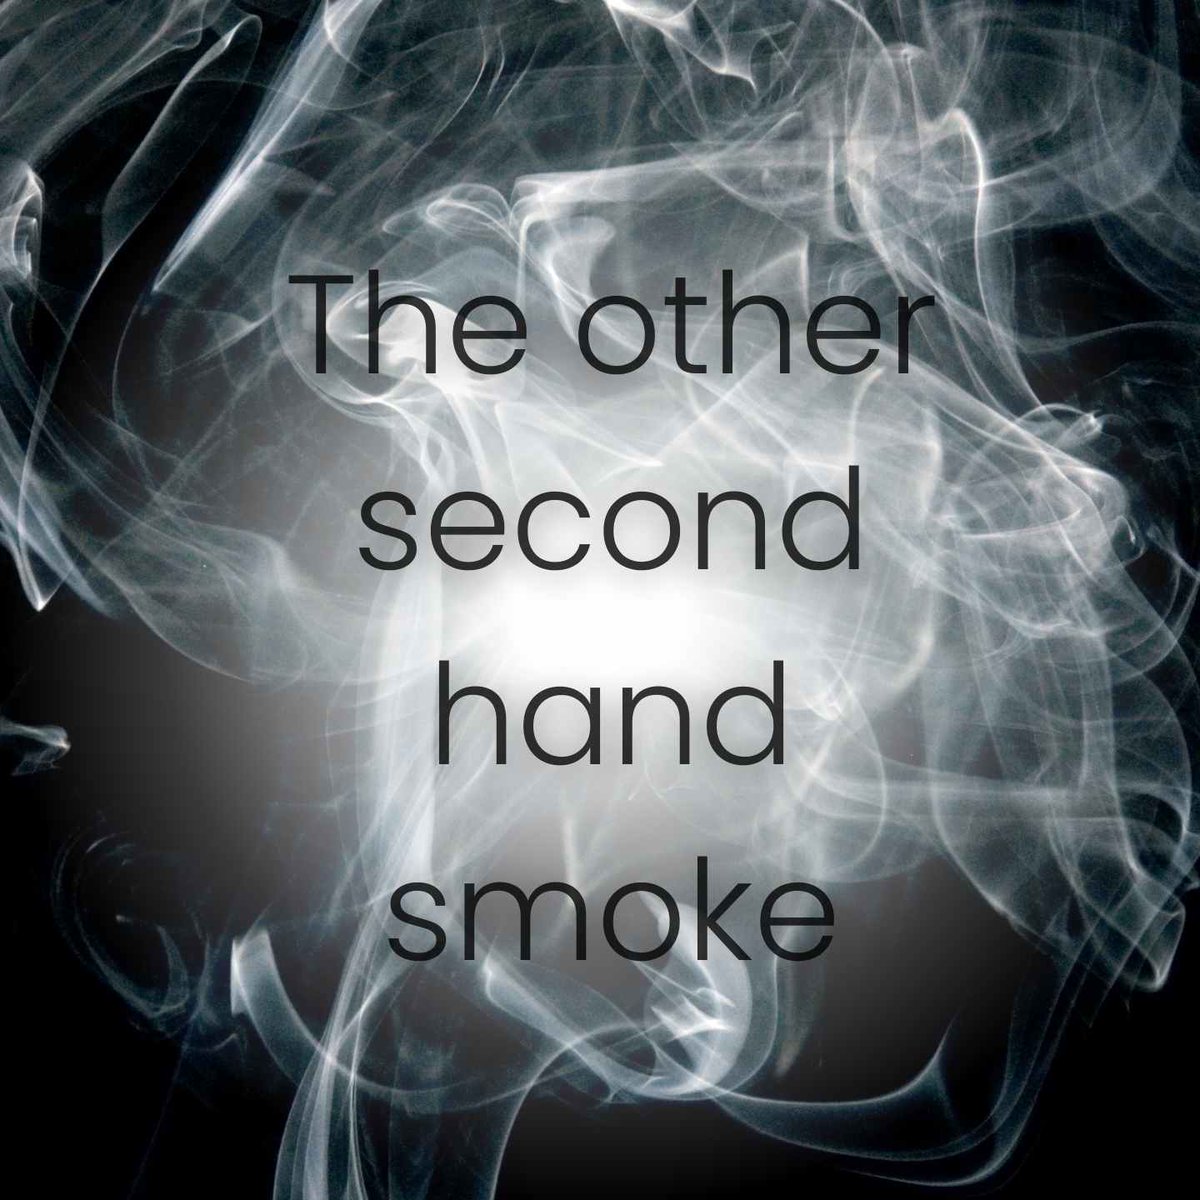 Wood smoke is the other second-hand smoke
tinyurl.com/ycyebj3a
woodburning.london #woodburning
#woodburninglondon #secondhandsmoke